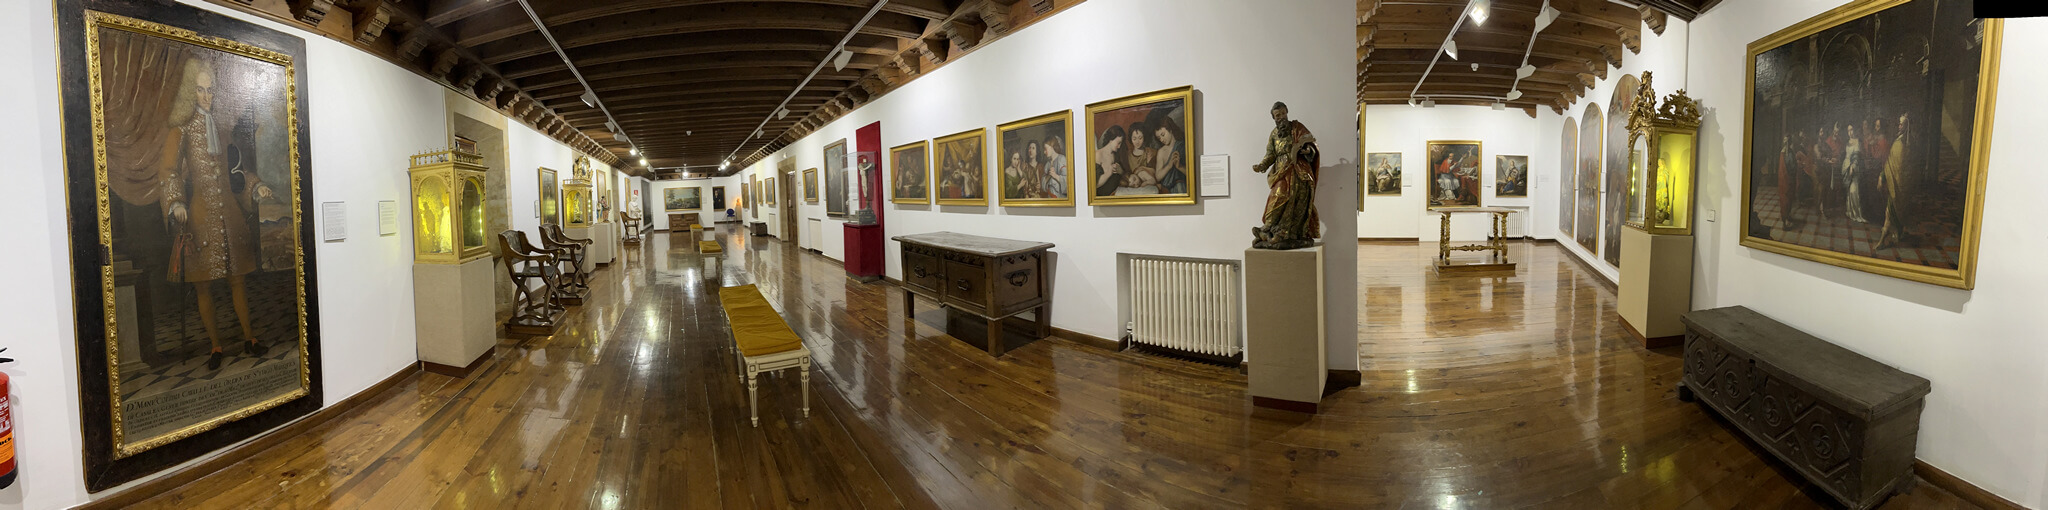 Museo de Salamanca | Visita | 18 de octubre de 2022